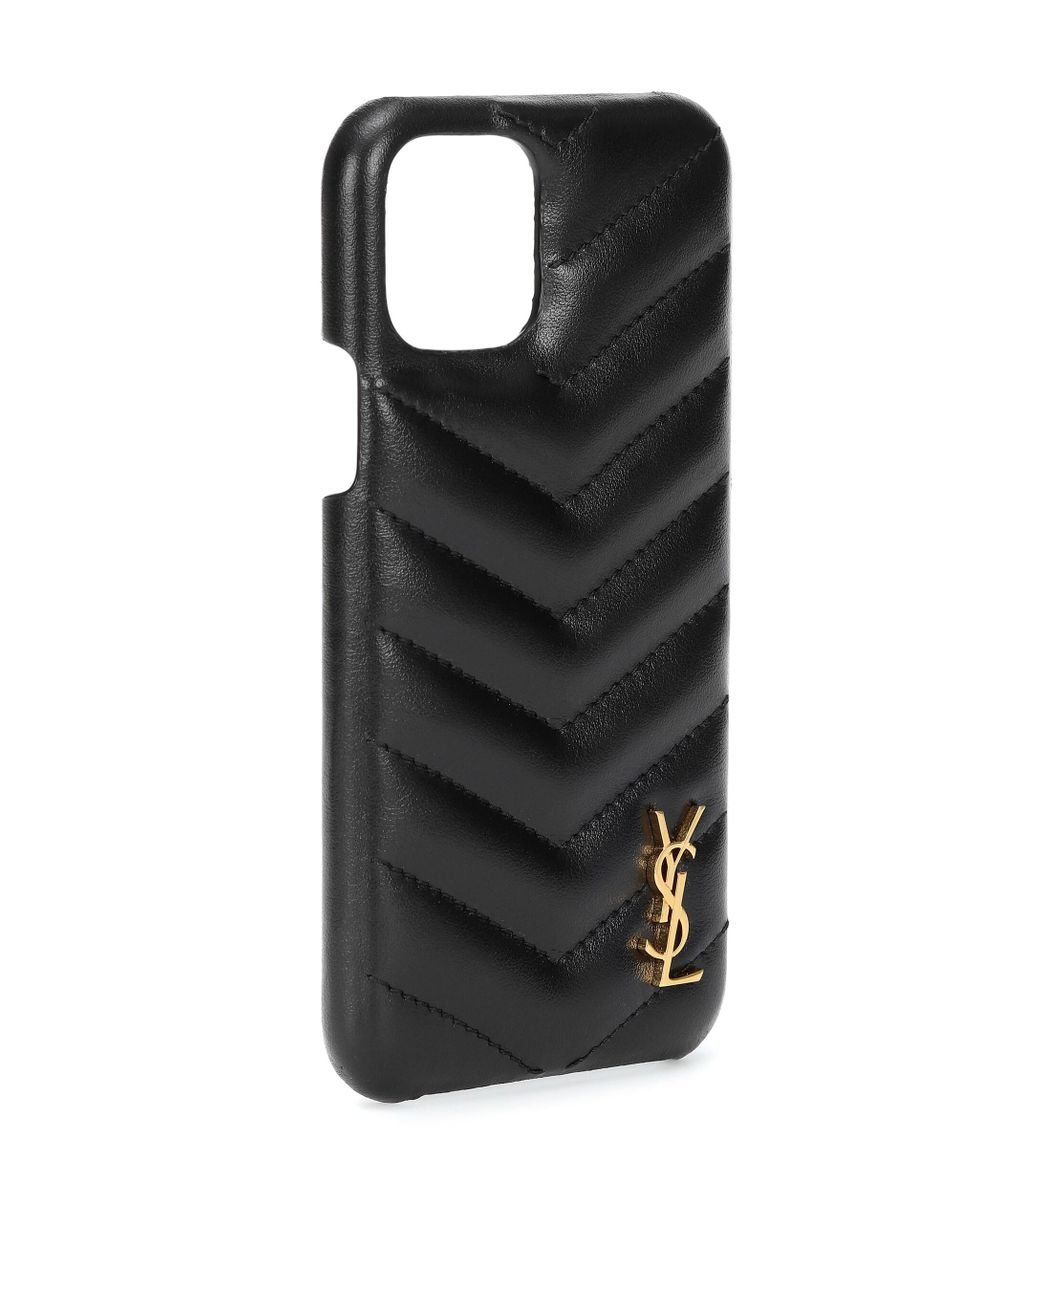 Saint Laurent Leather Iphone 11 Pro Case in Black | Lyst